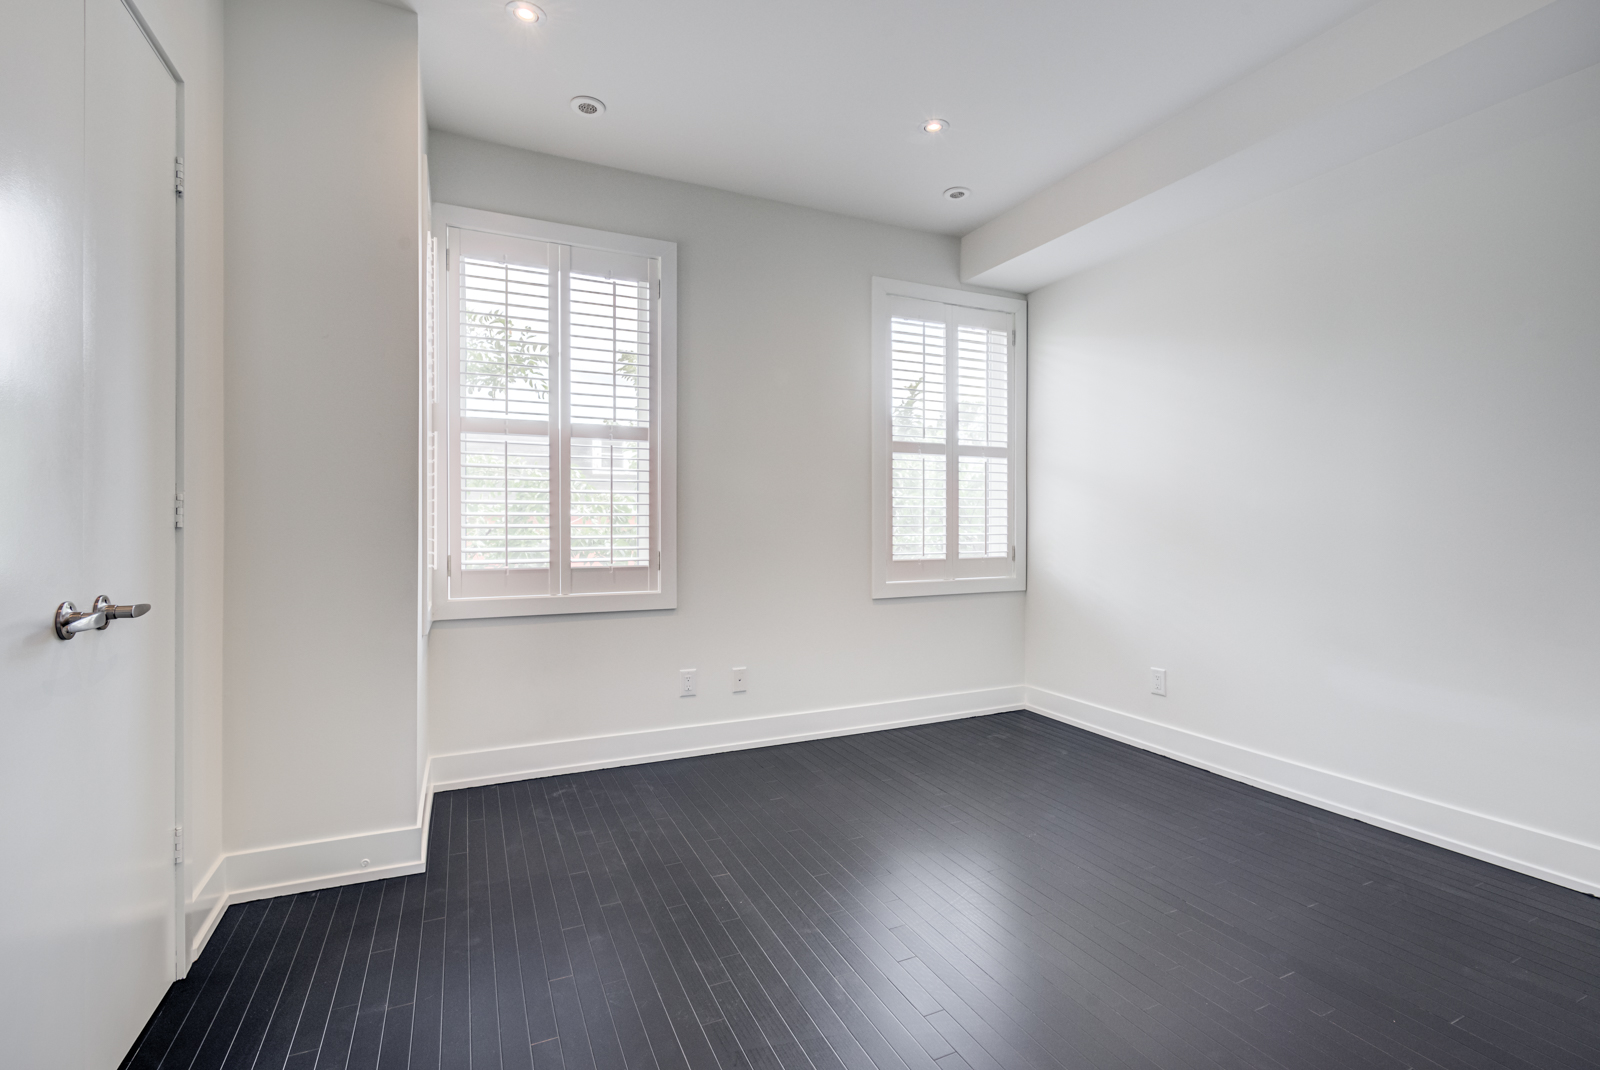 empty bedroom with black hardwood floors and gray walls